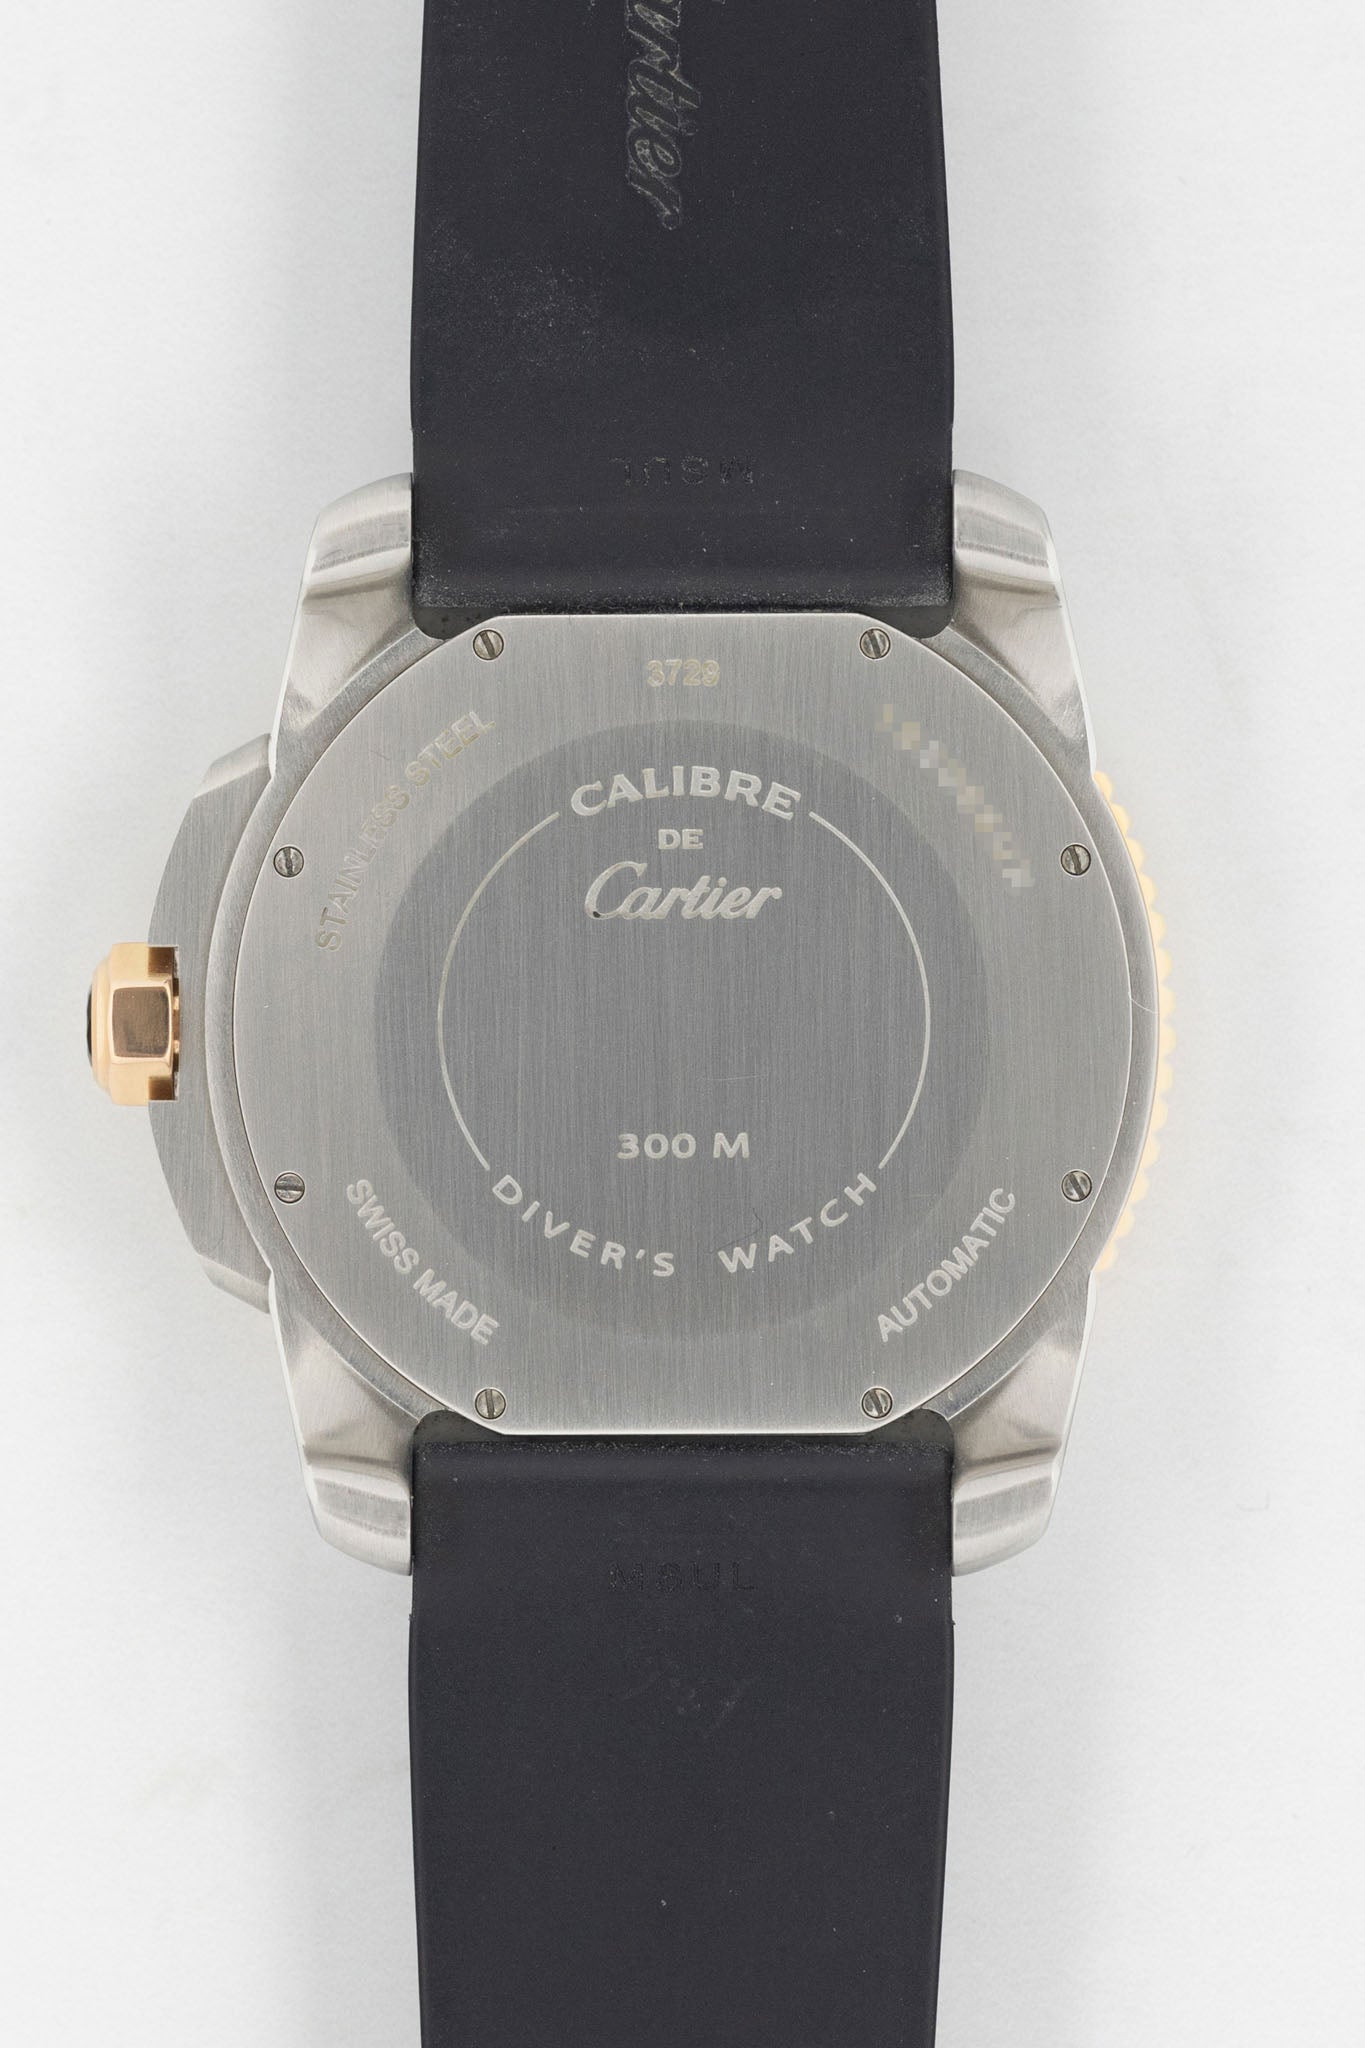 Cartier Calibre de Cartier - Black, Gold